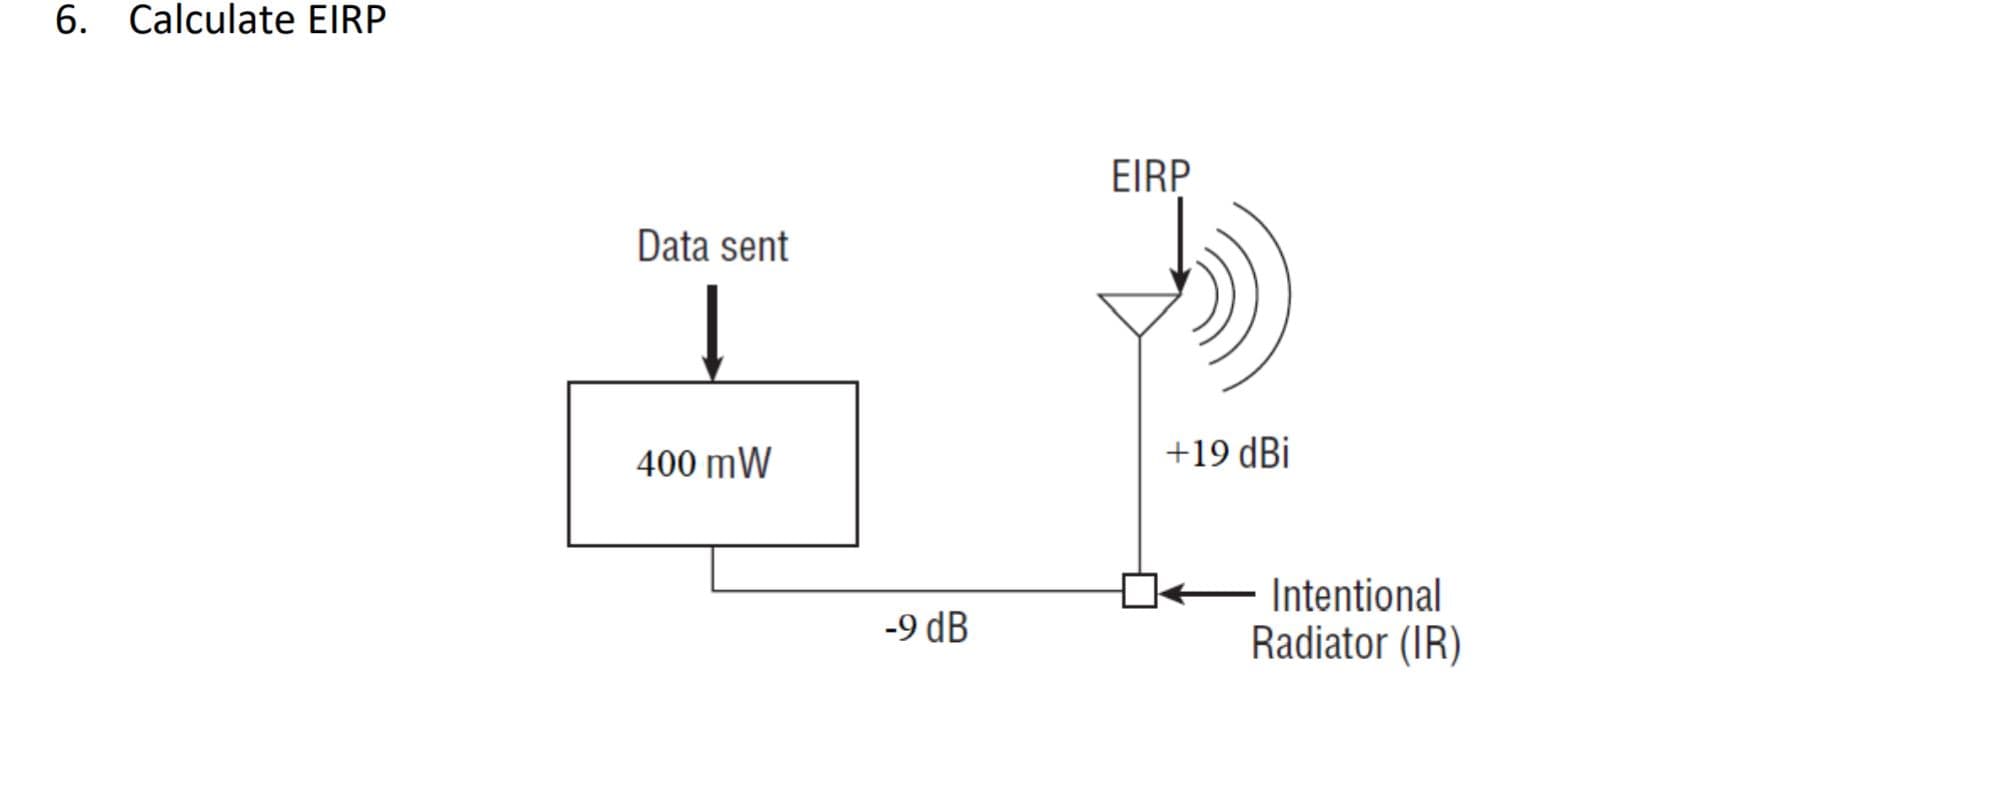 Calculate EIRP
EIRP
Data sent
400 mW
+19 dBi
Intentional
-9 dB
Radiator (IR)
6.
